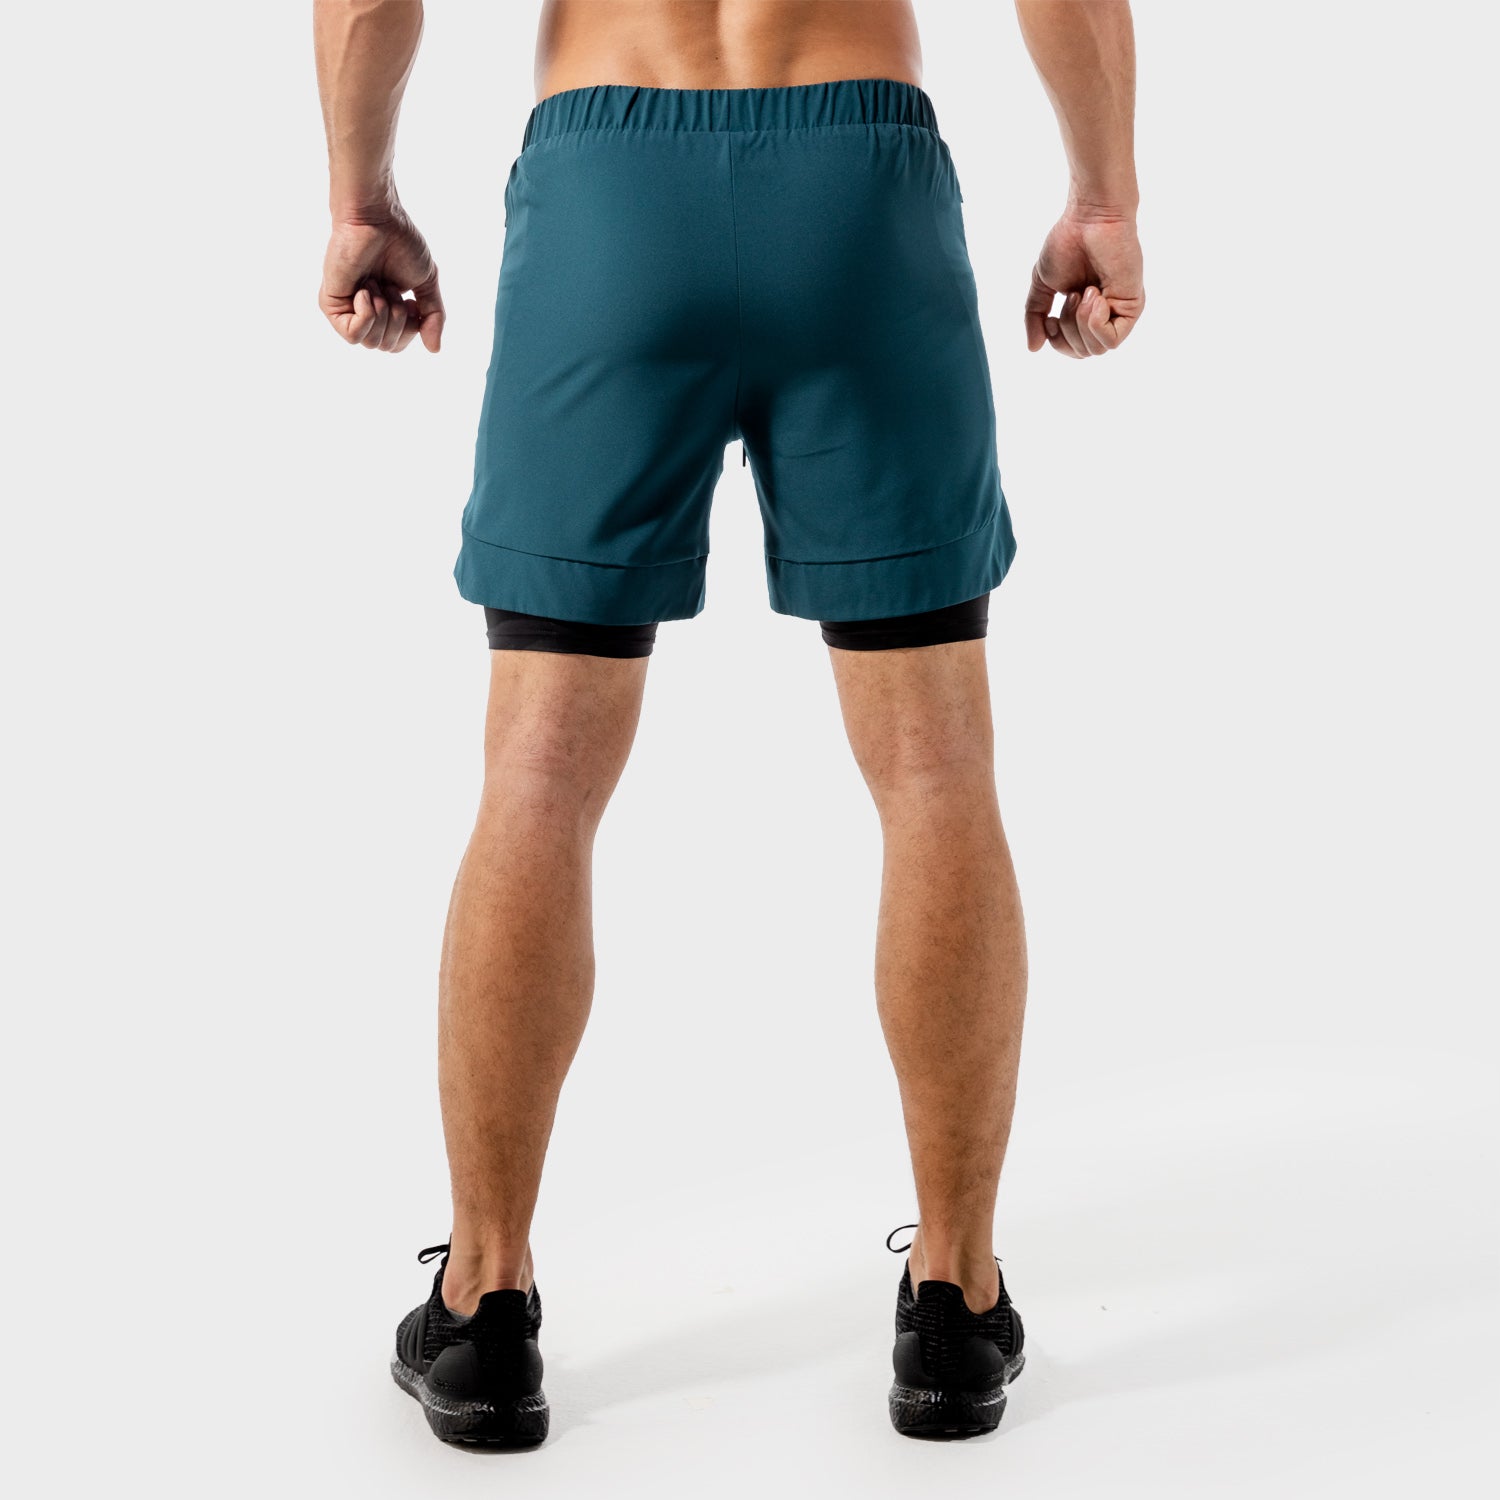 Limitless 2-in-1 Shorts - Light Grey | Gym Shorts Men | SQUATWOLF